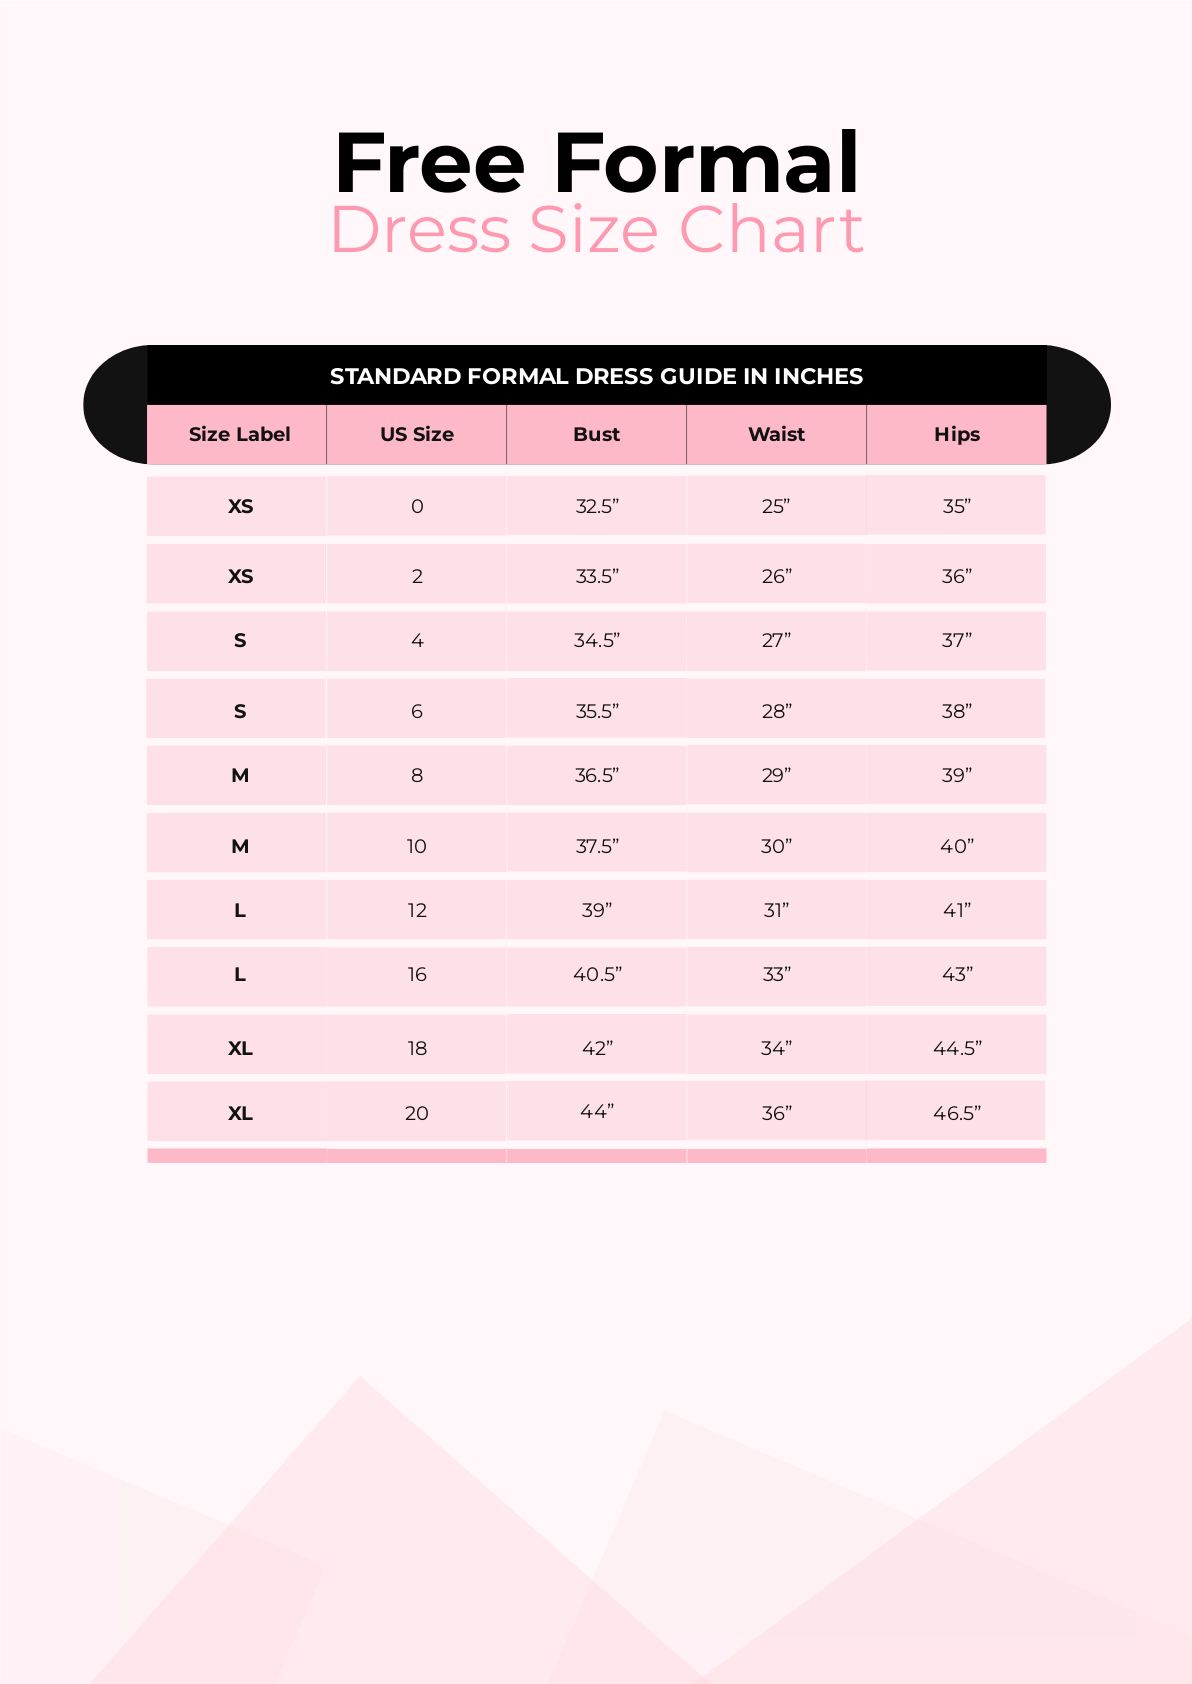 Free Formal Dress Size Chart in PDF